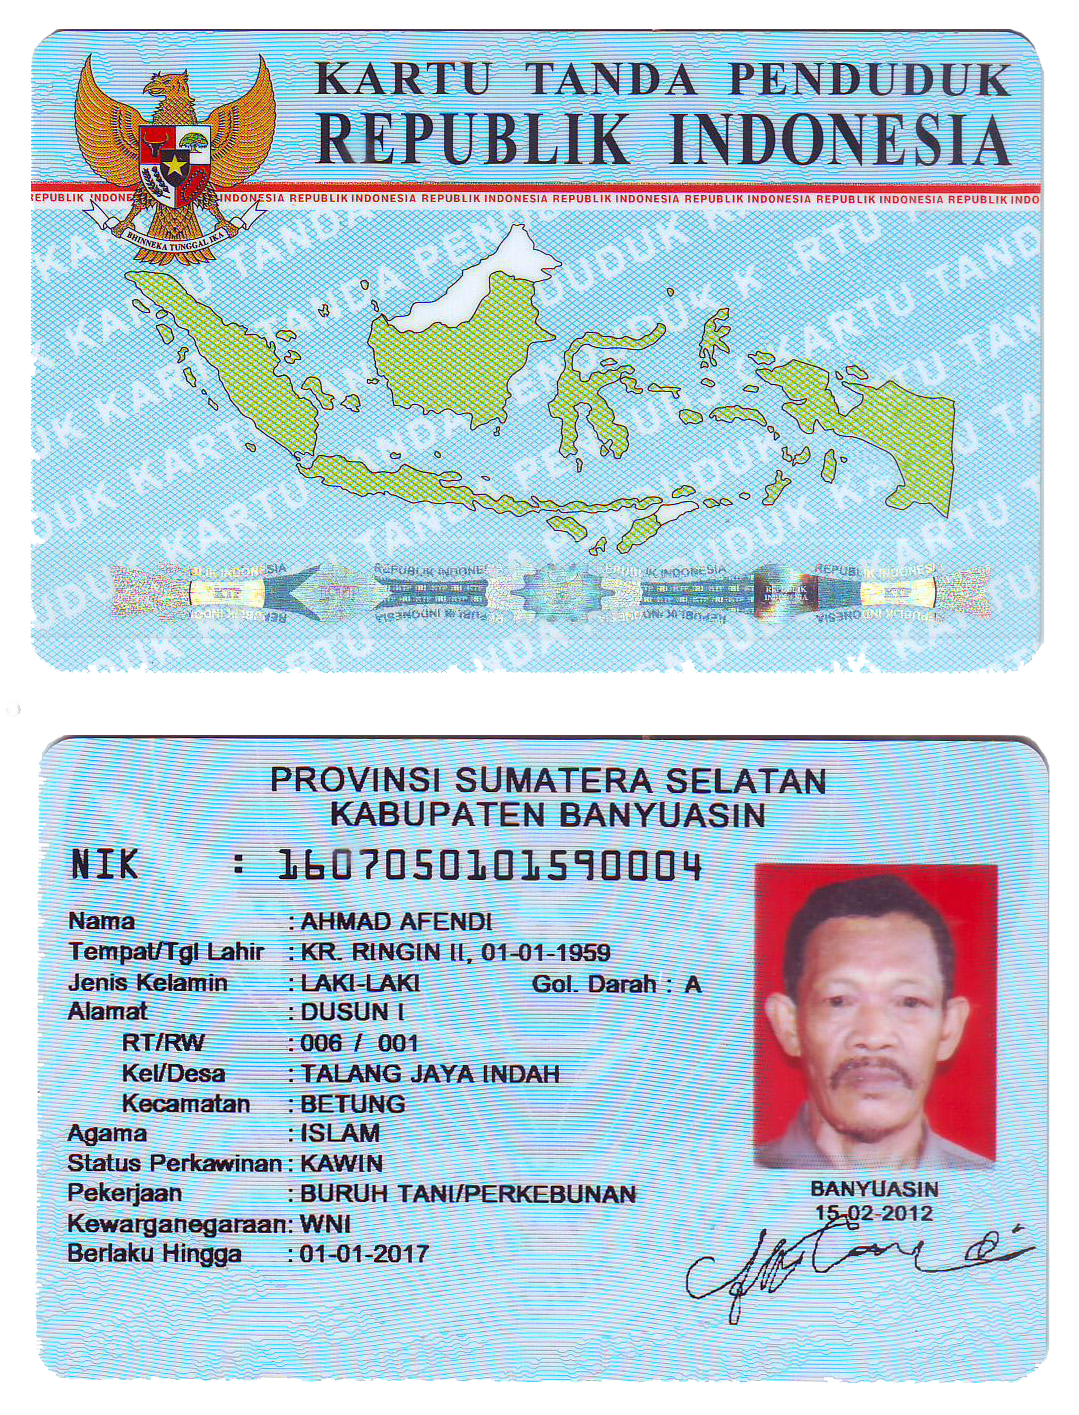 Yuk liat bedanya ID card elektronik punya indonesia sama 